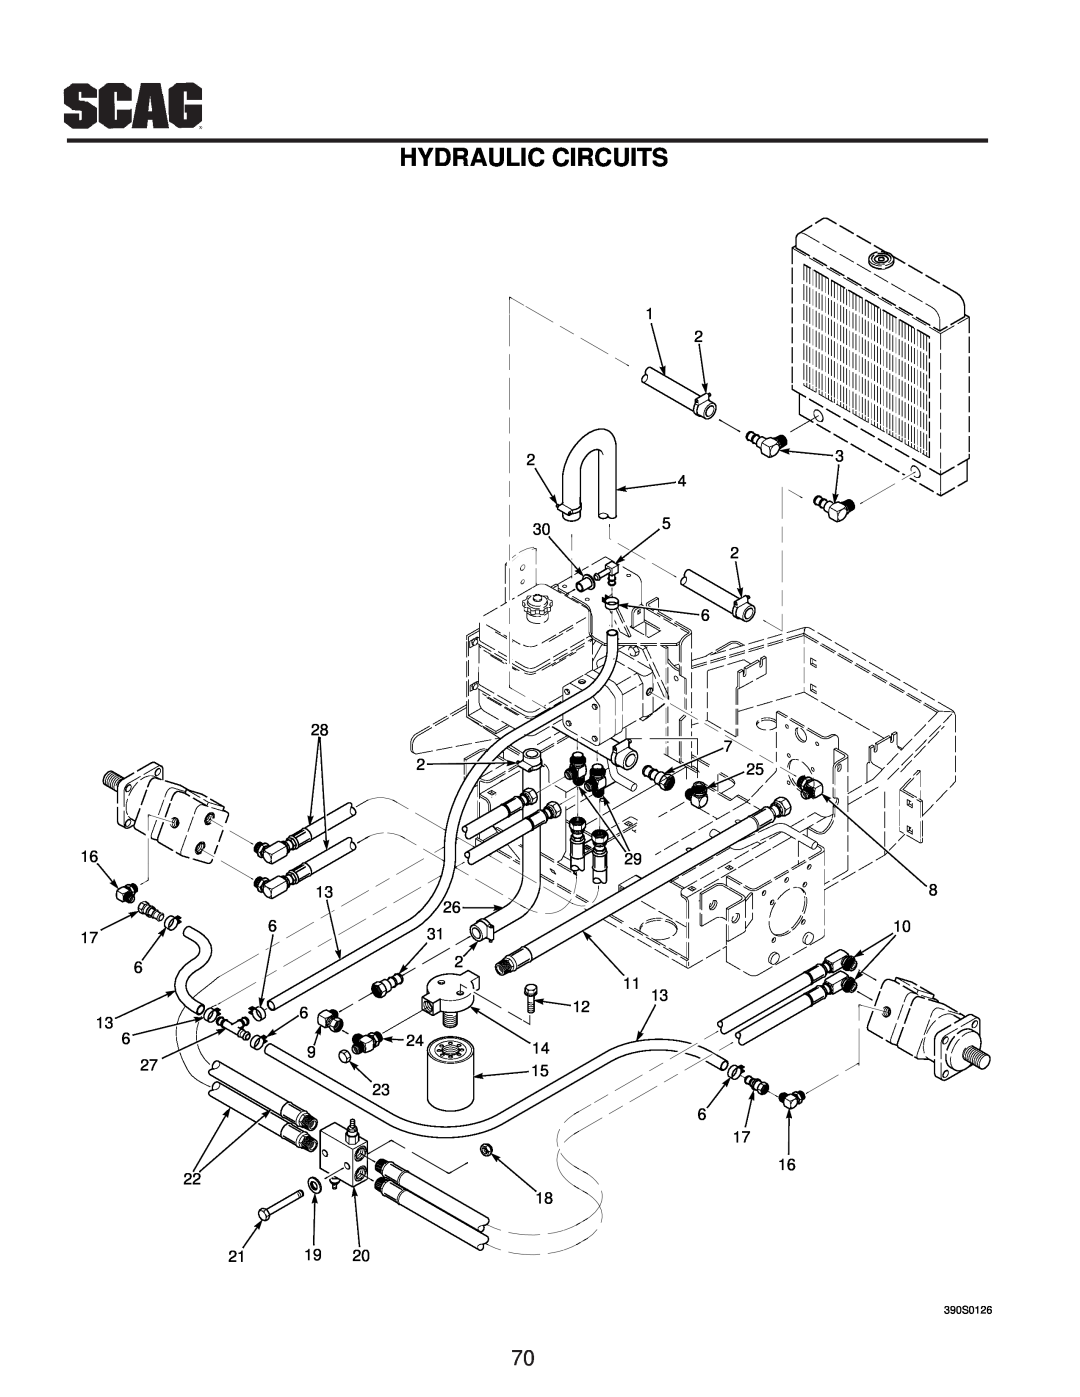 Scag Power Equipment MAG manual Hydraulic Circuits, 390S0126 